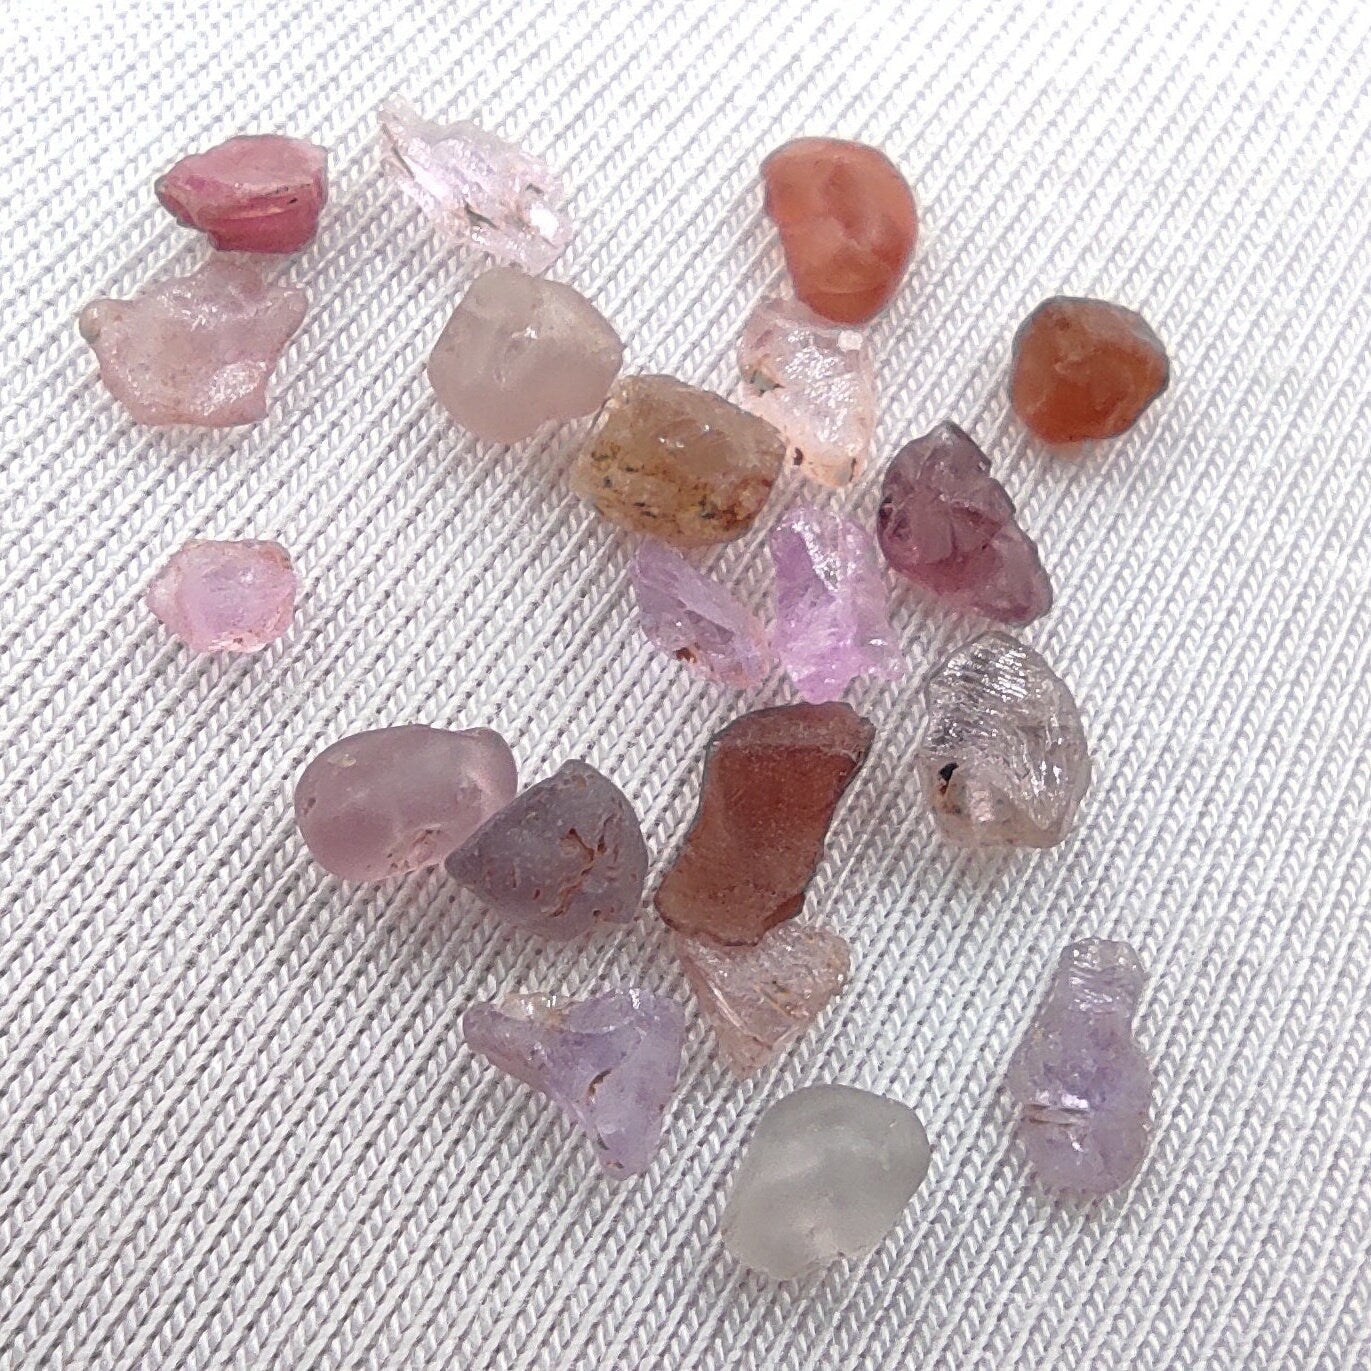 5.20ct Pink Sapphire Lot - Untreated & Unheated Sapphires - Rough Sapphire Gems from Madagascar - Raw Sapphire Gemstones - Rough Gems